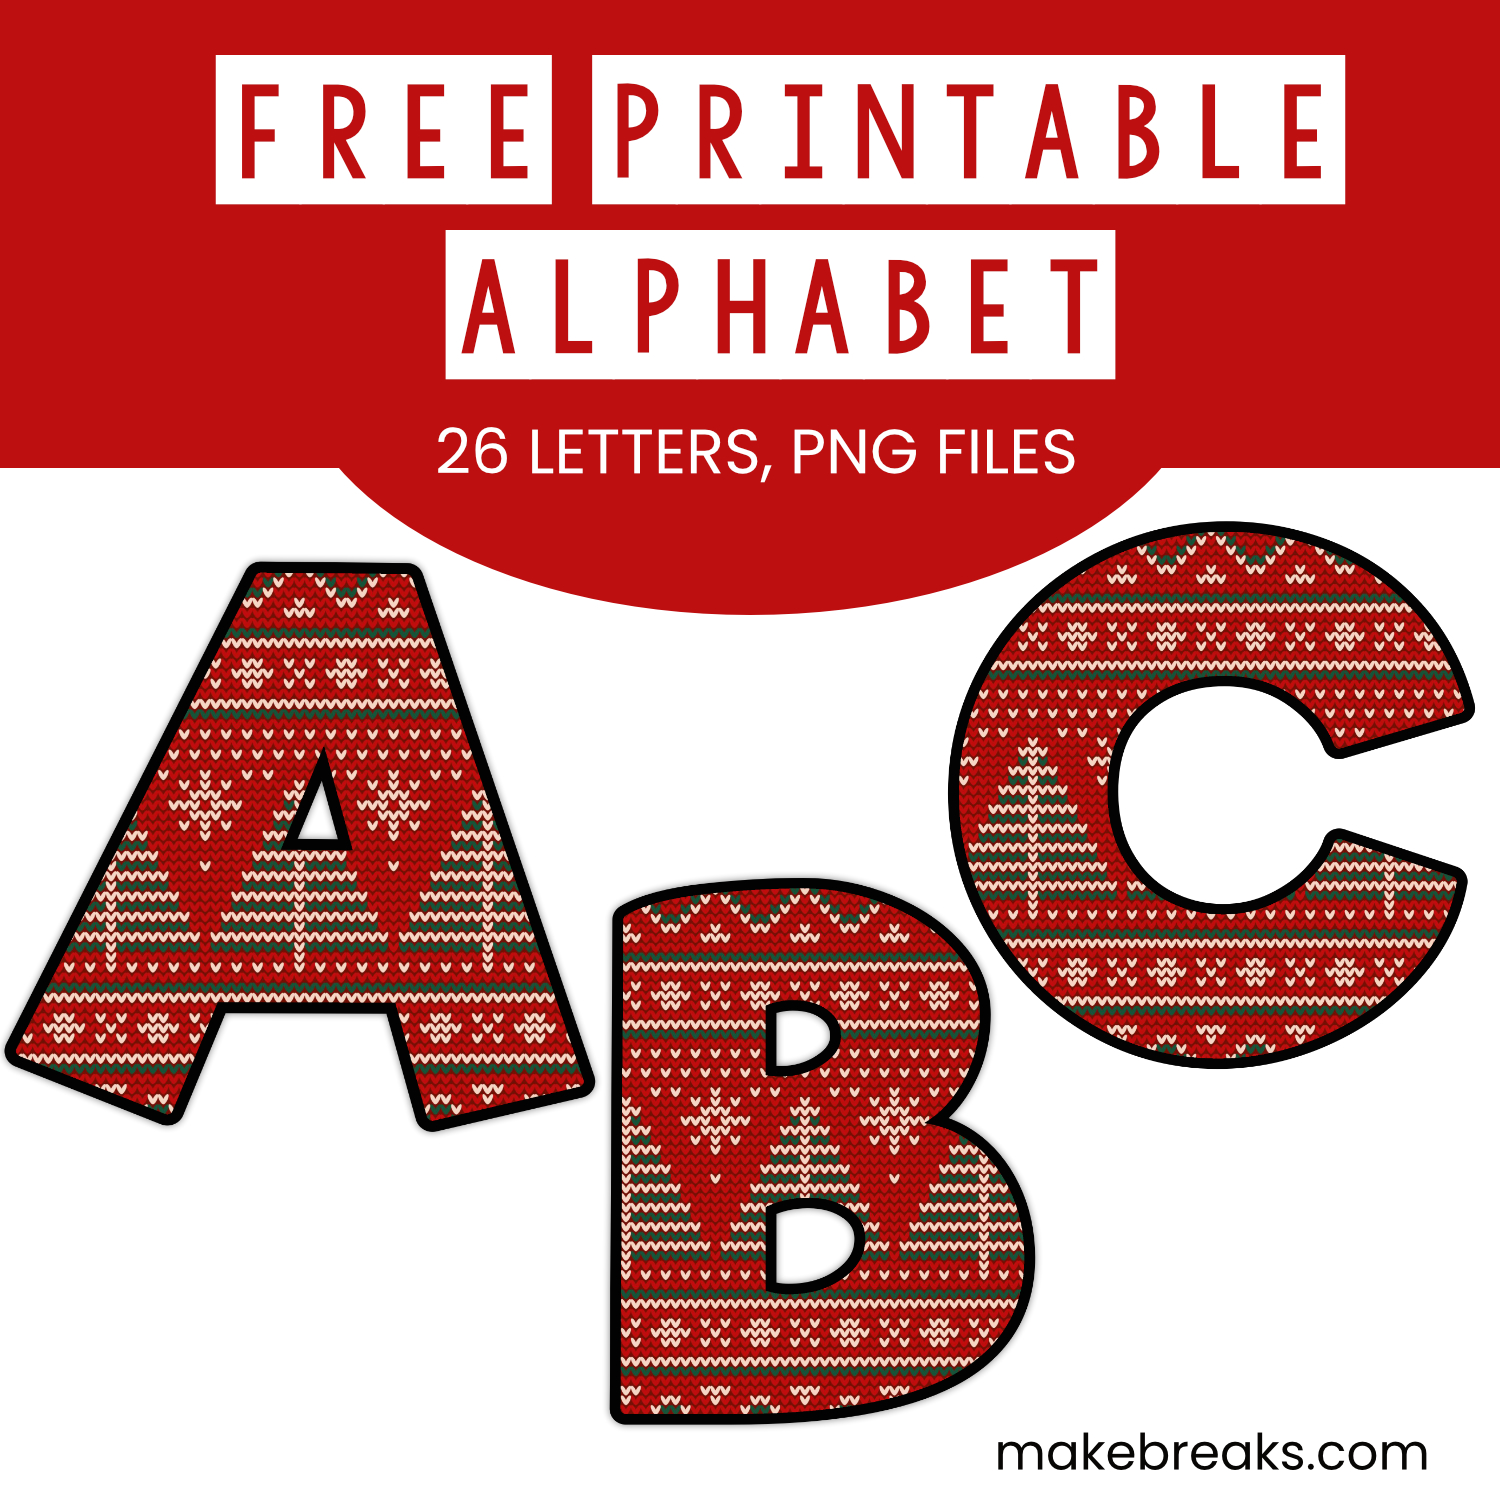 Ugly Sweater Free Printable Alphabet 1